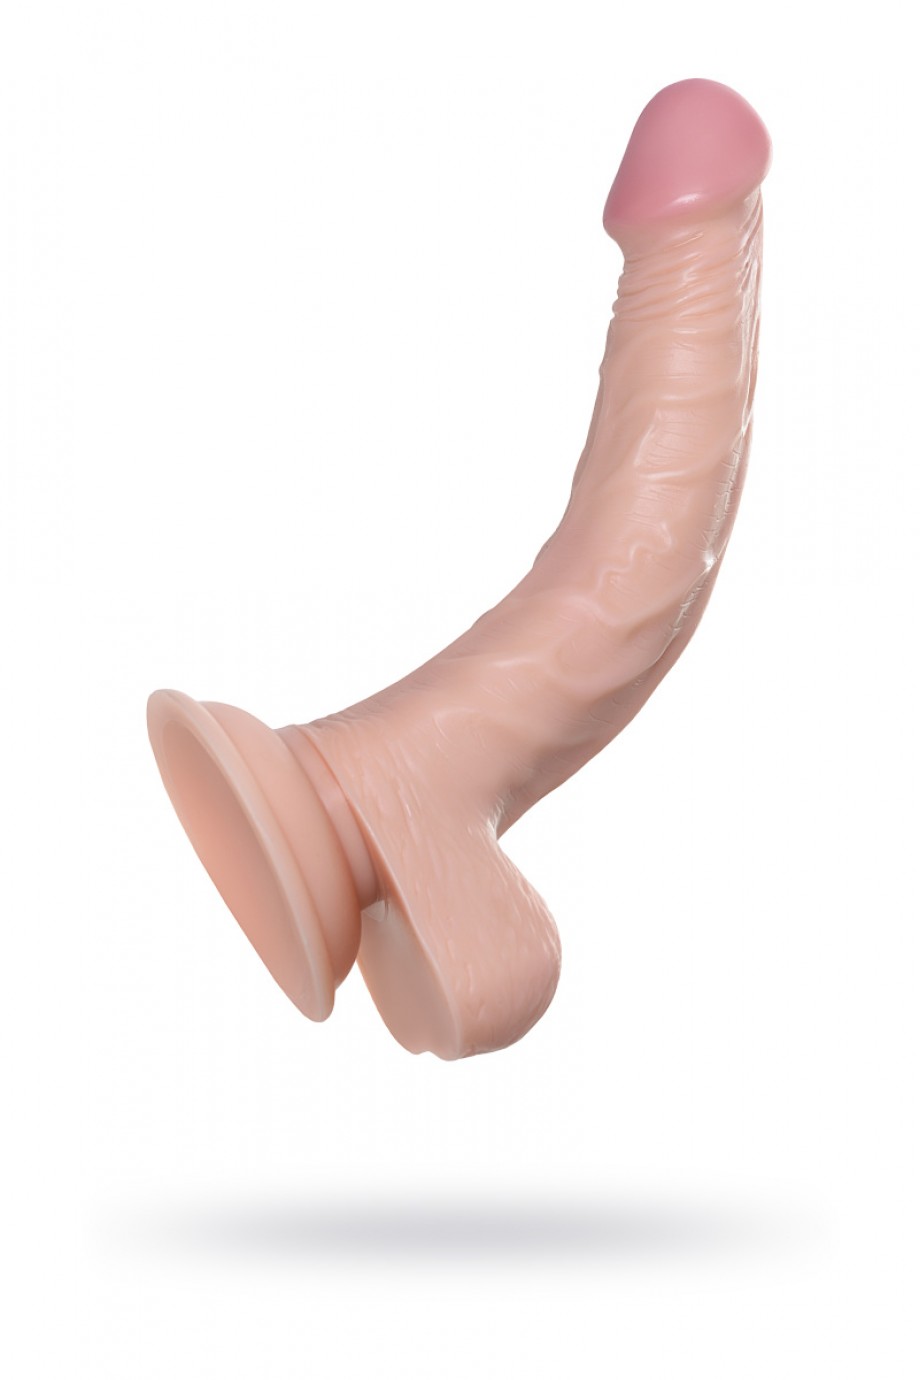 TOYFA RealStick Nude, 18 см